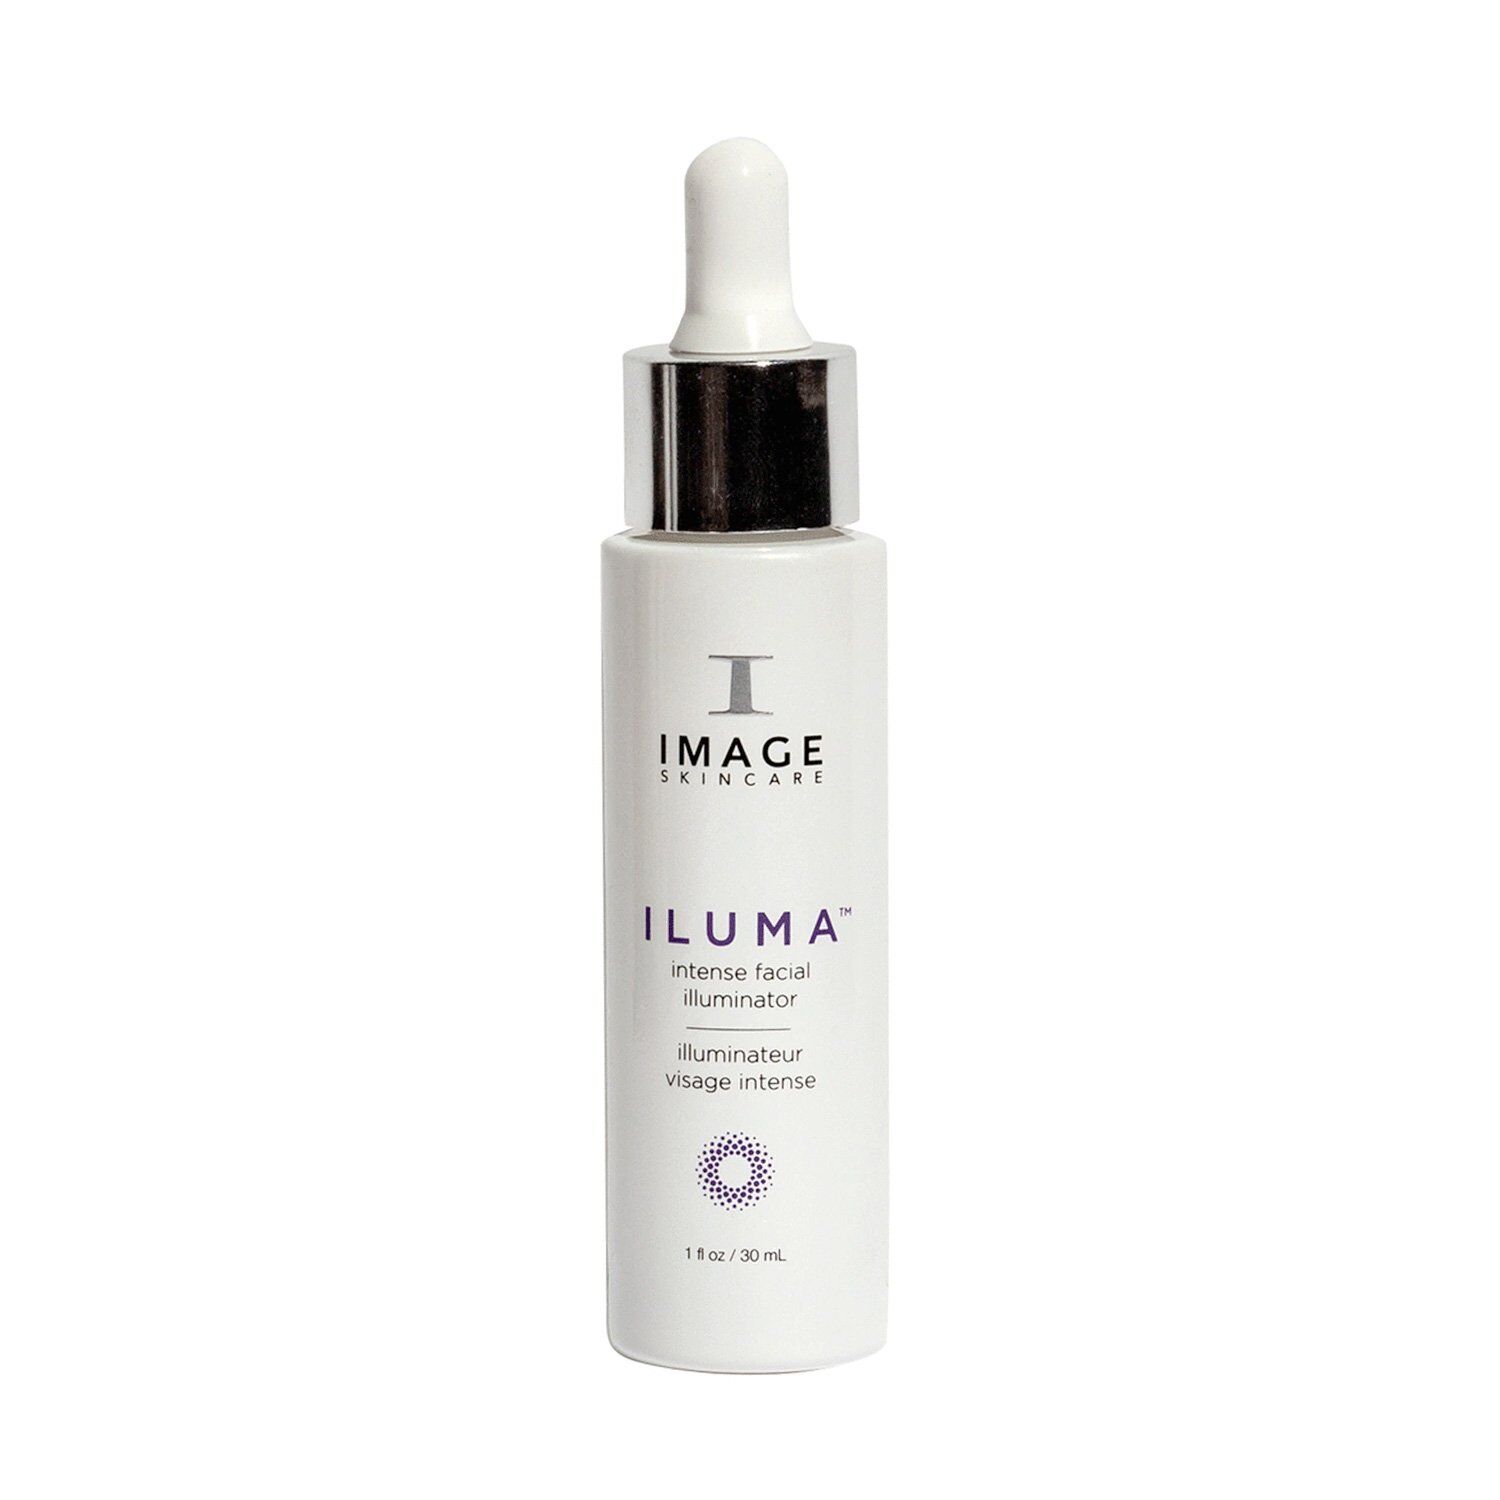 Image skincare - Iluma Intense Facial Illuminator